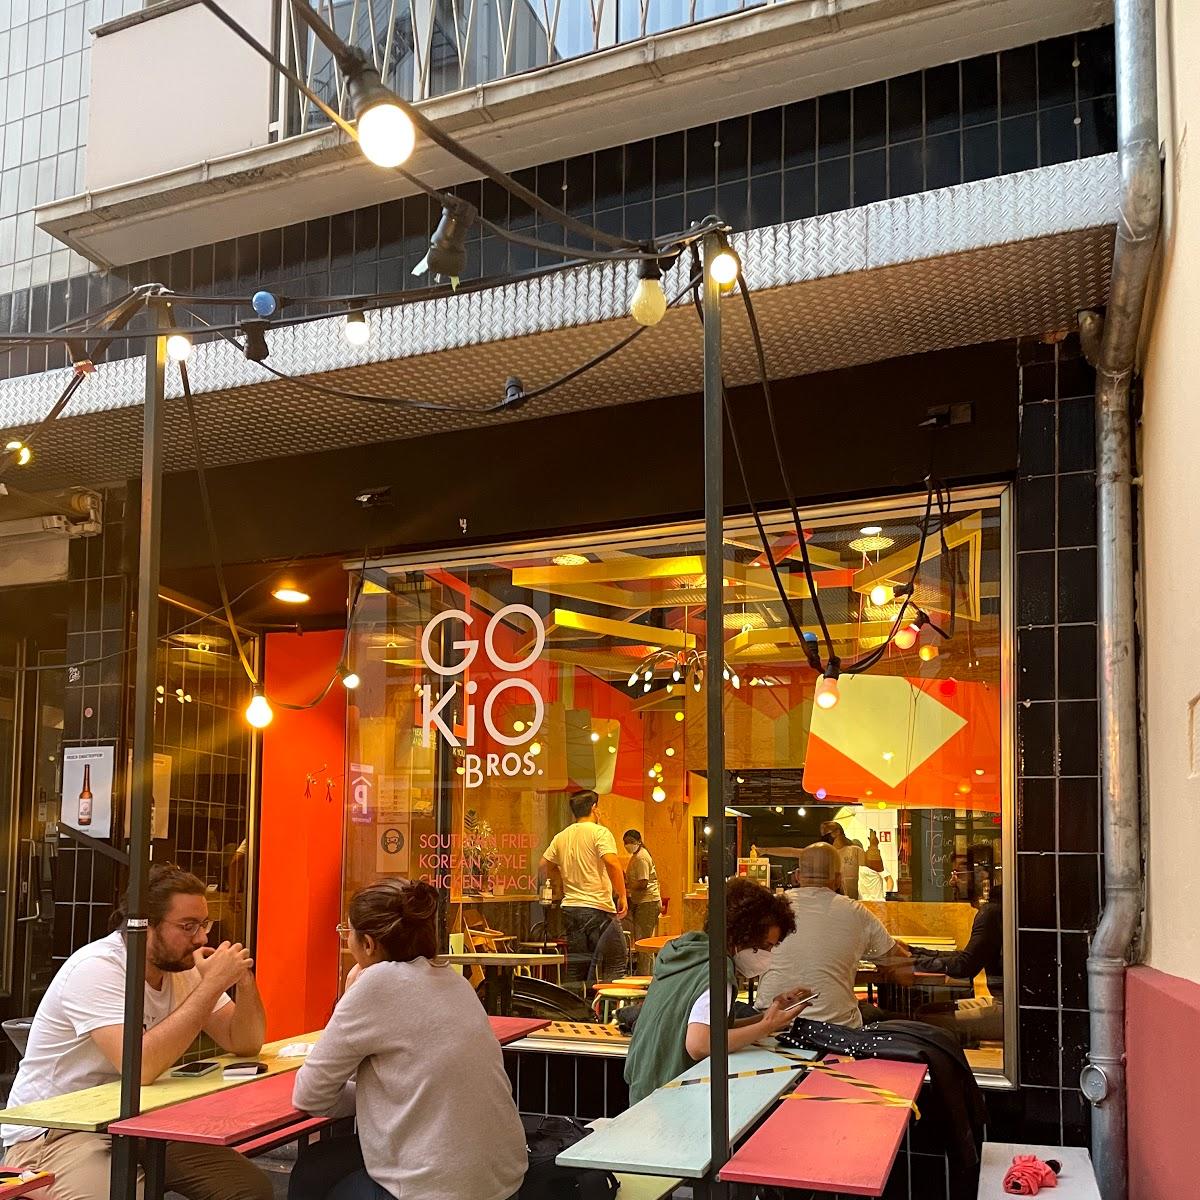 Restaurant "GOKIO Bros." in Frankfurt am Main